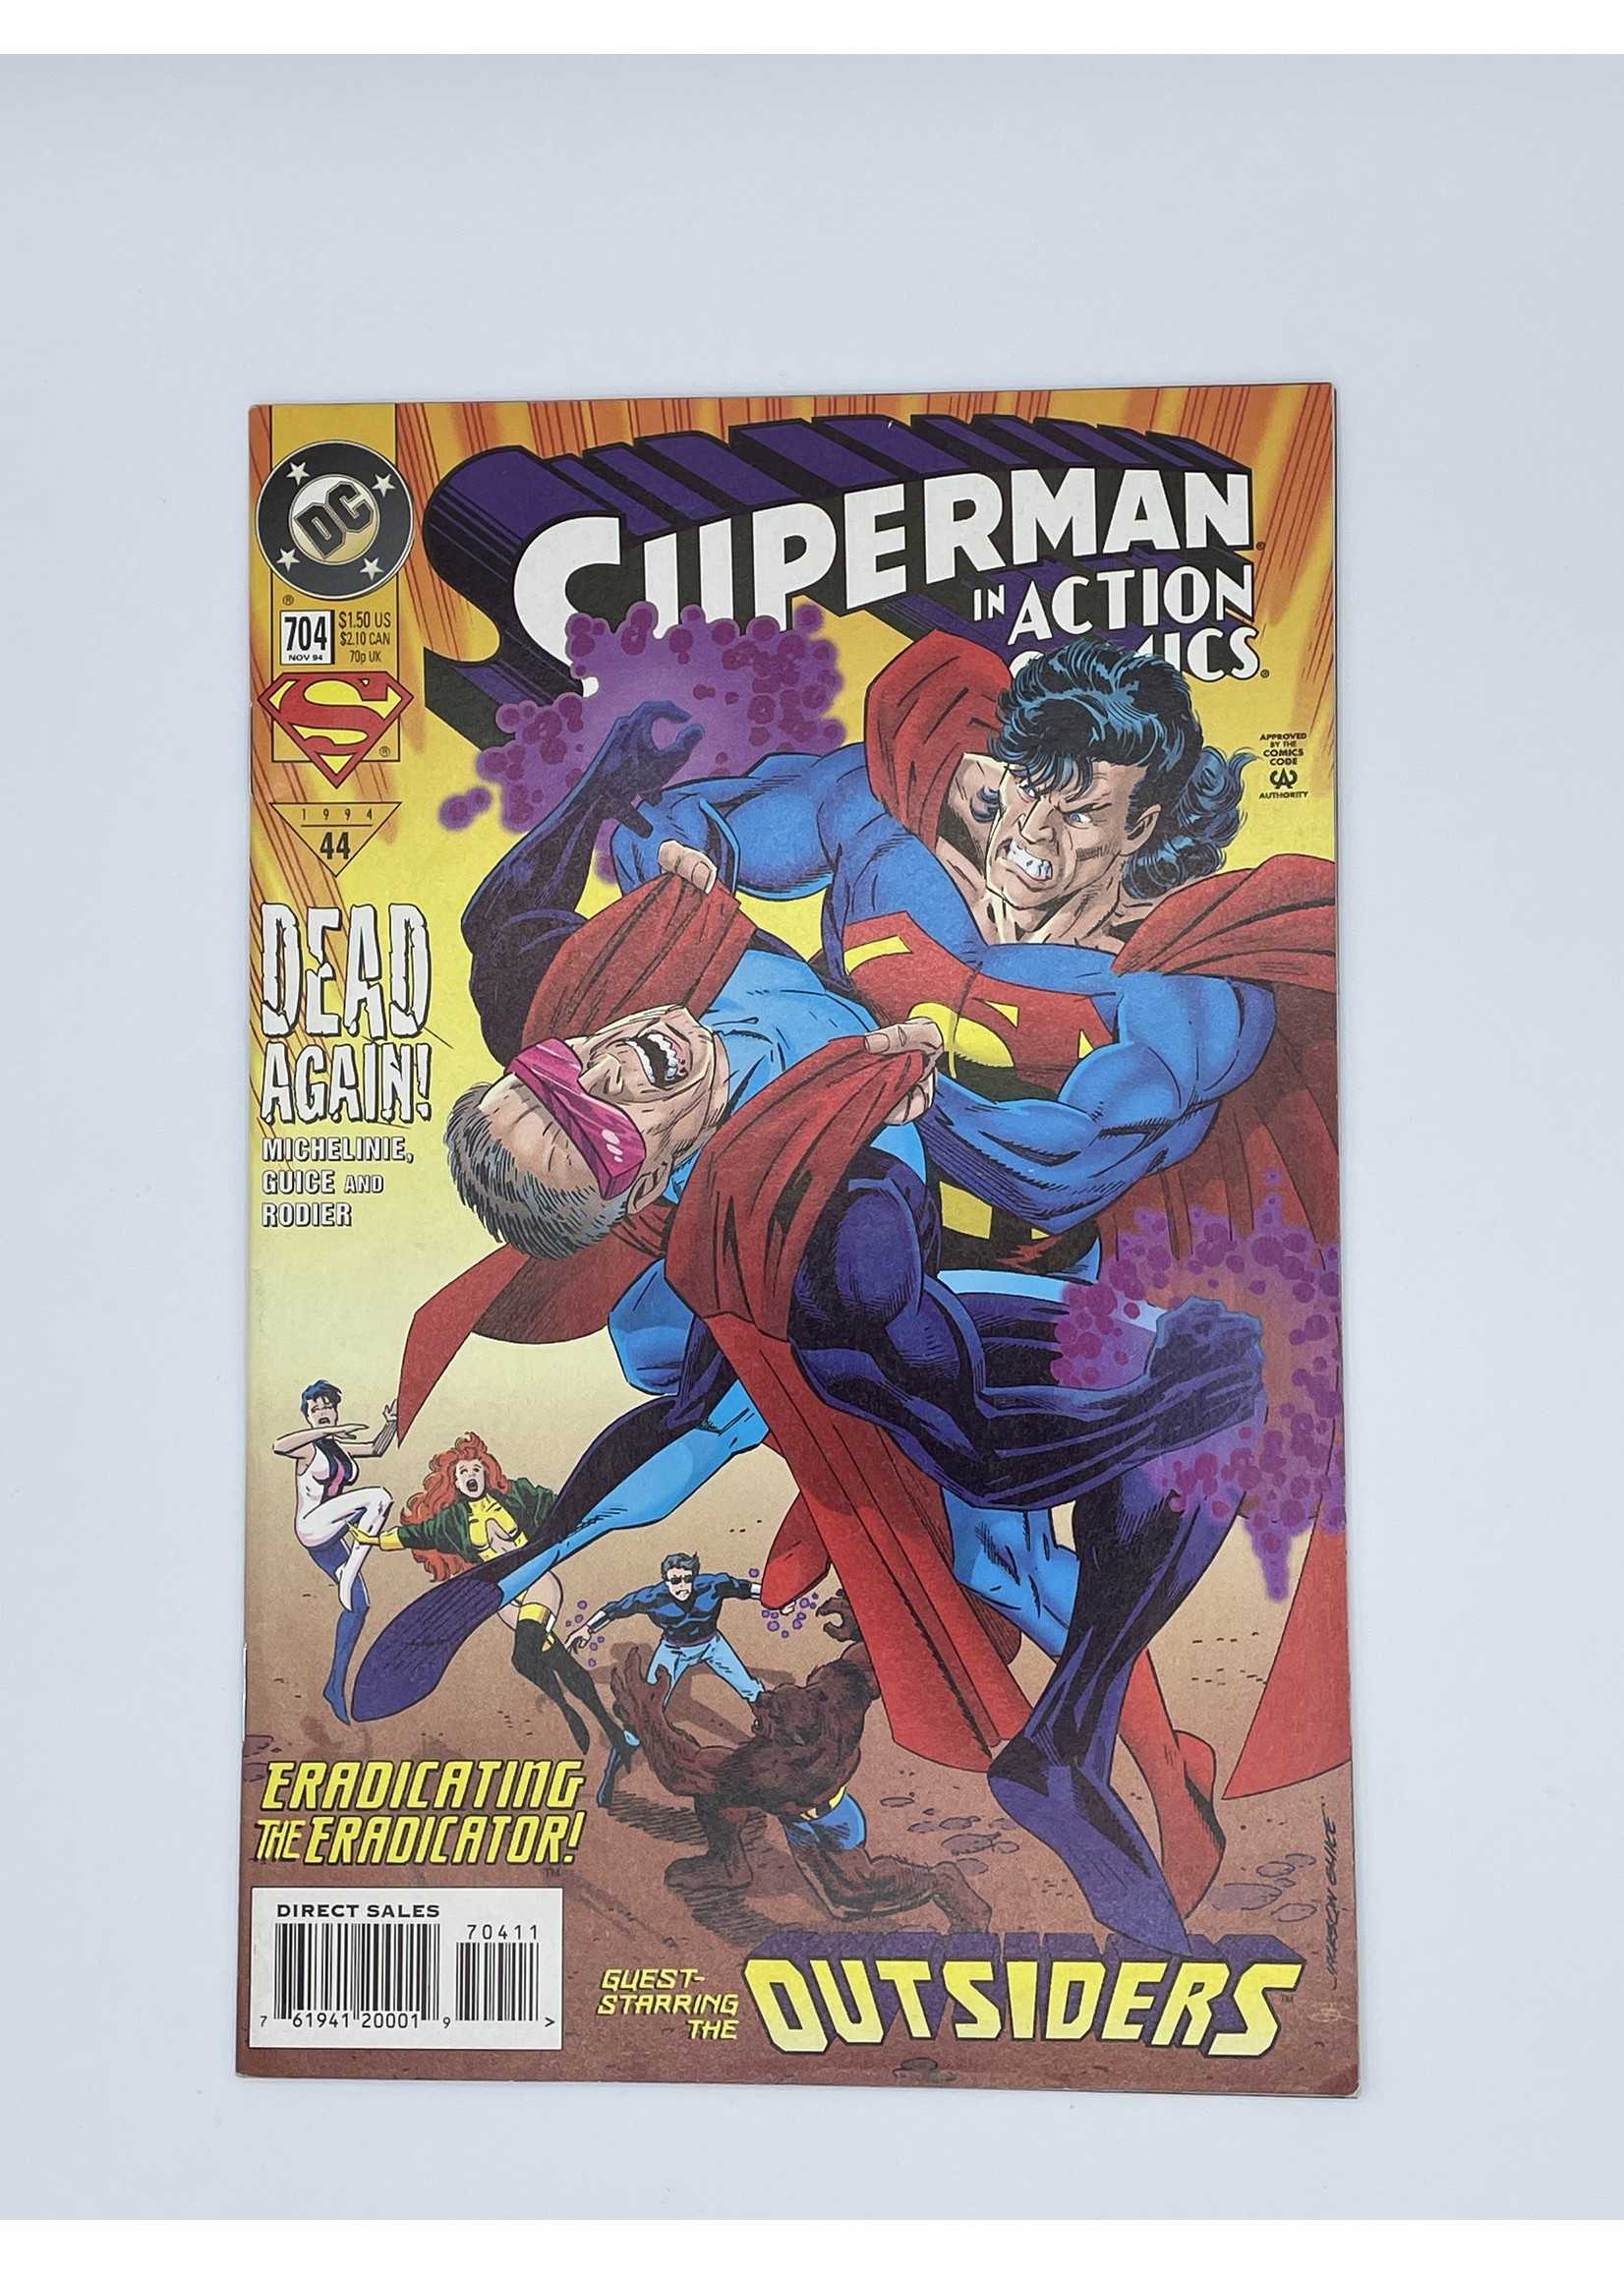 DC Action Comics #704 November 1994